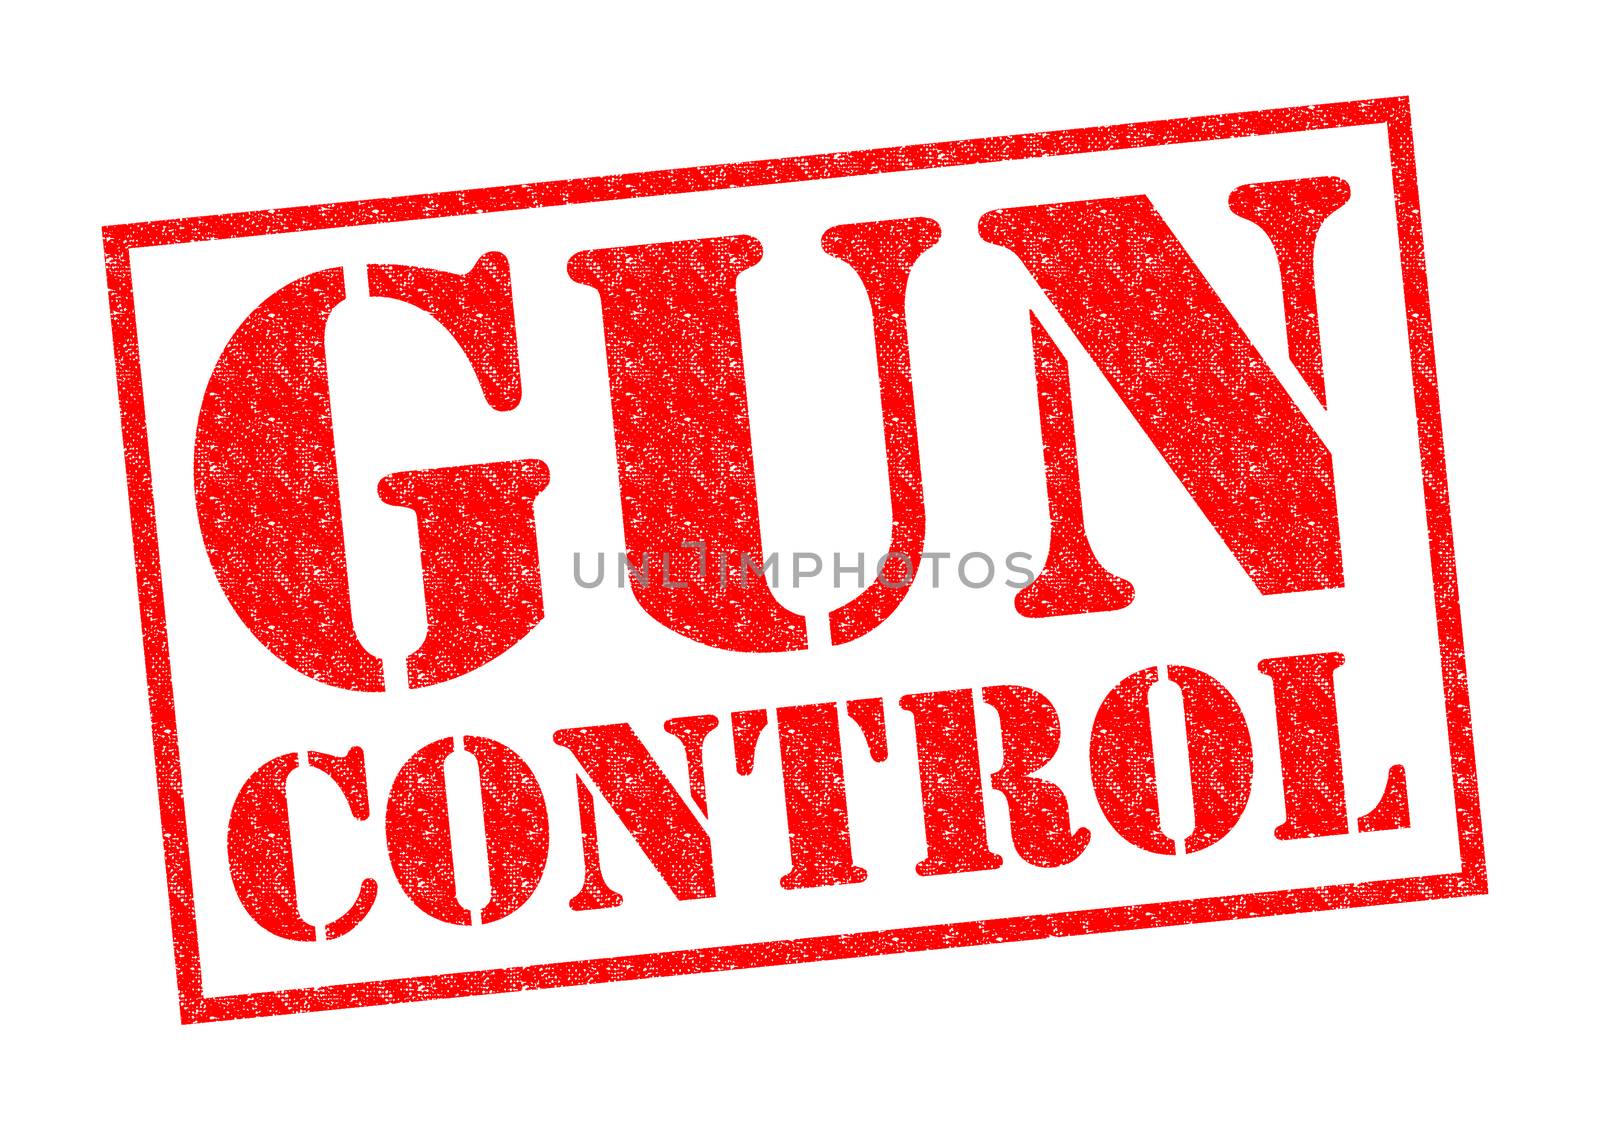 GUN CONTROL by chrisdorney